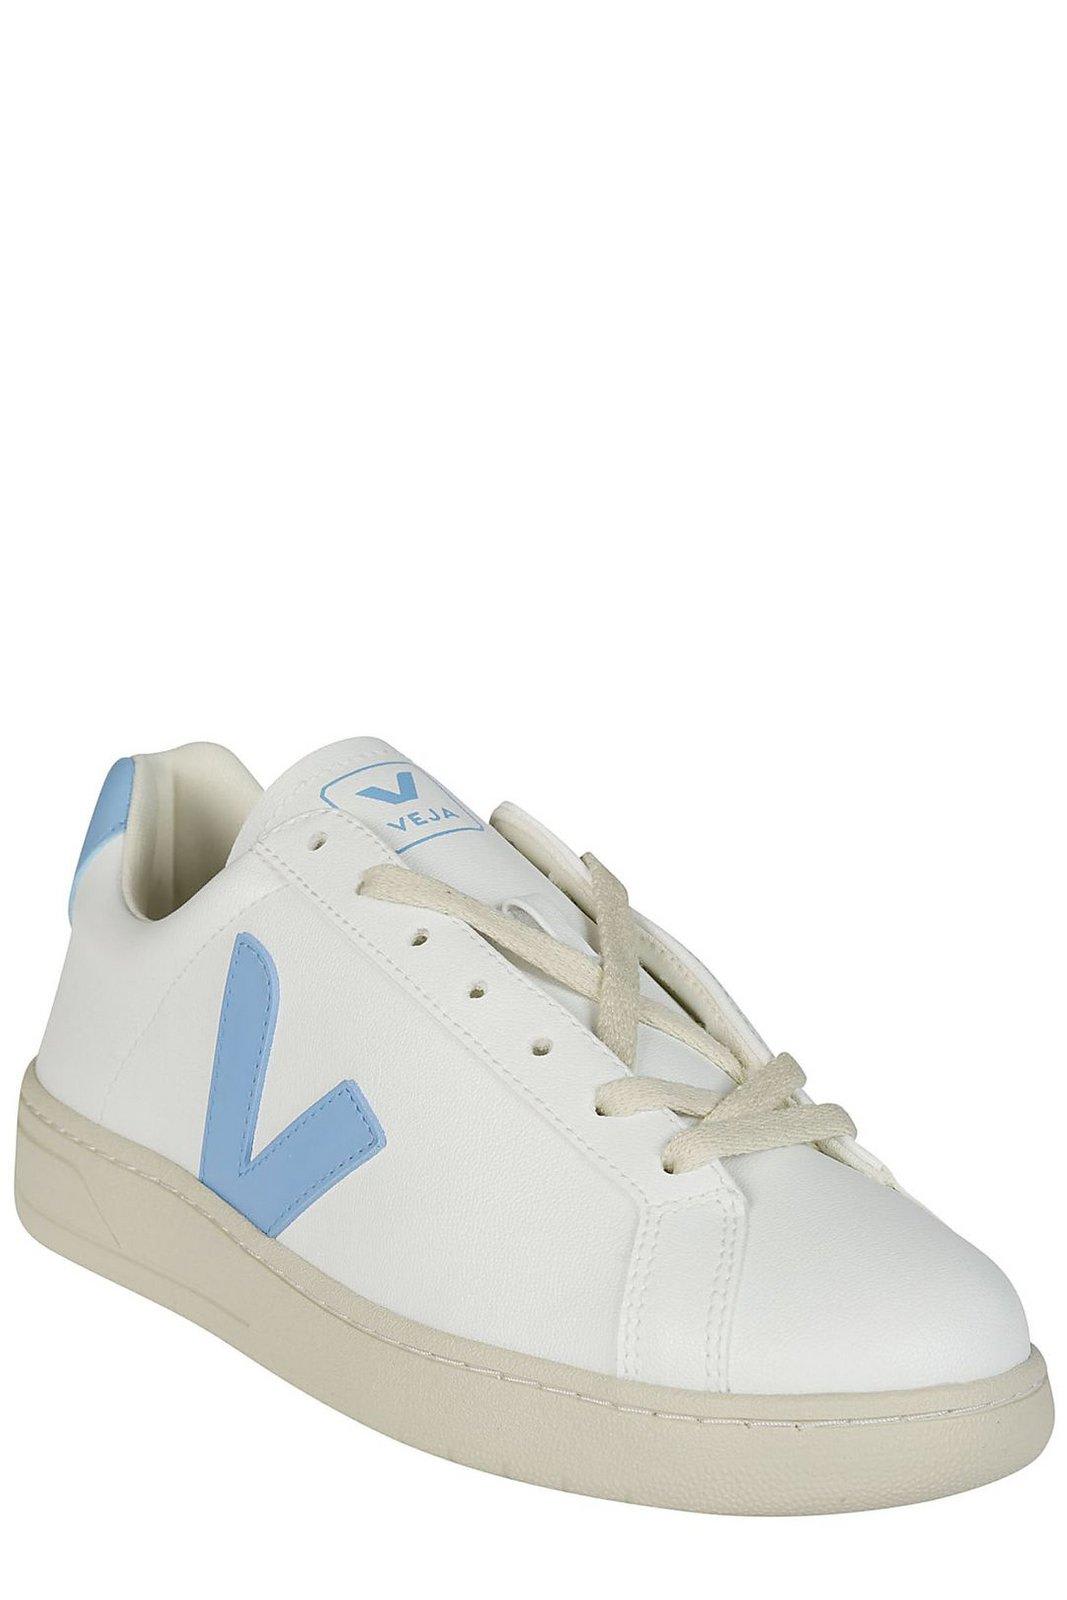 Shop Veja Urca Logo Printed Sneakers In White/blue